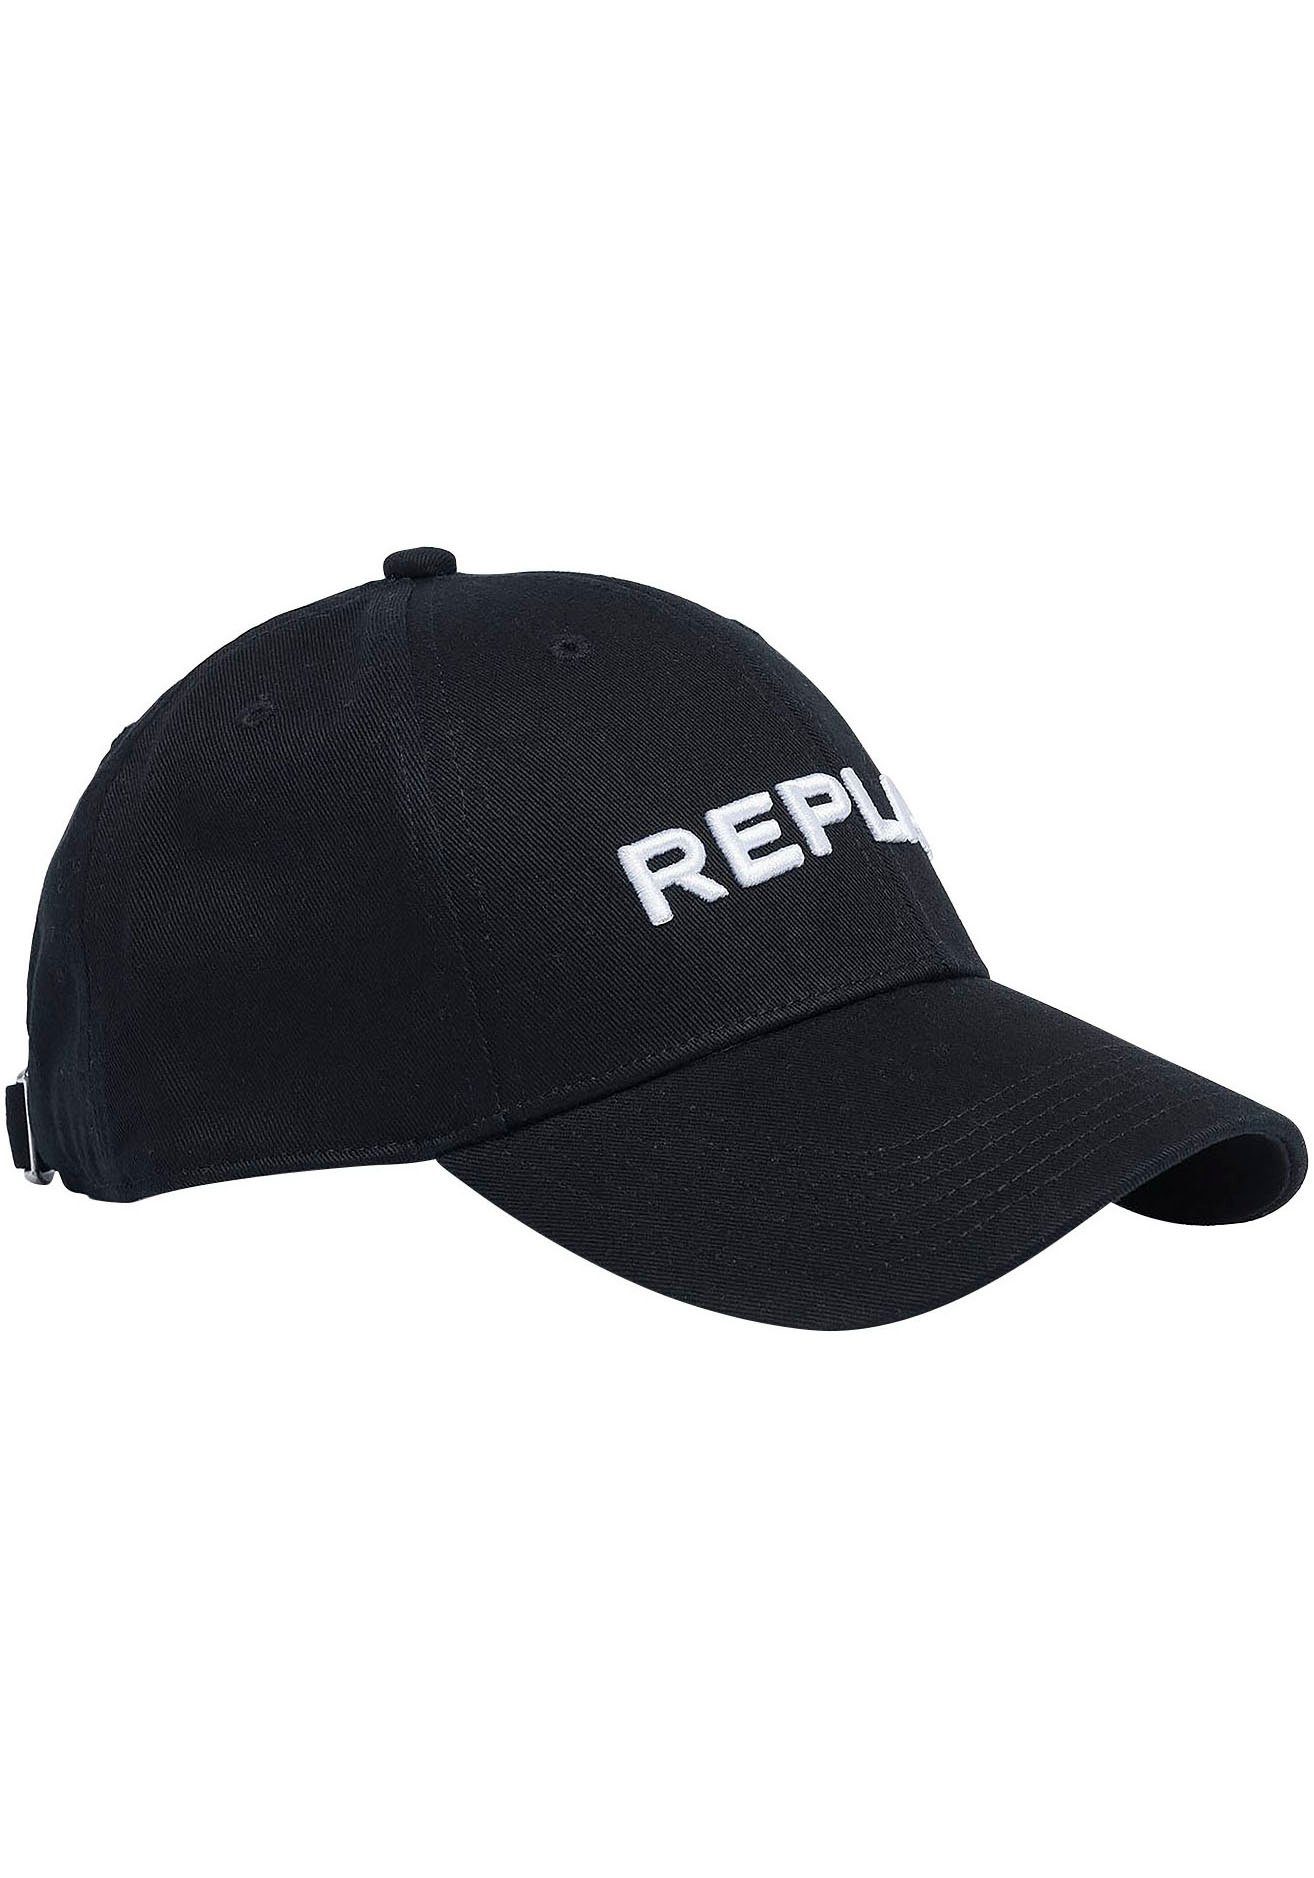 NATURALE Replay black mit Cap Baseball Logo-Stickerei COMPONENTE